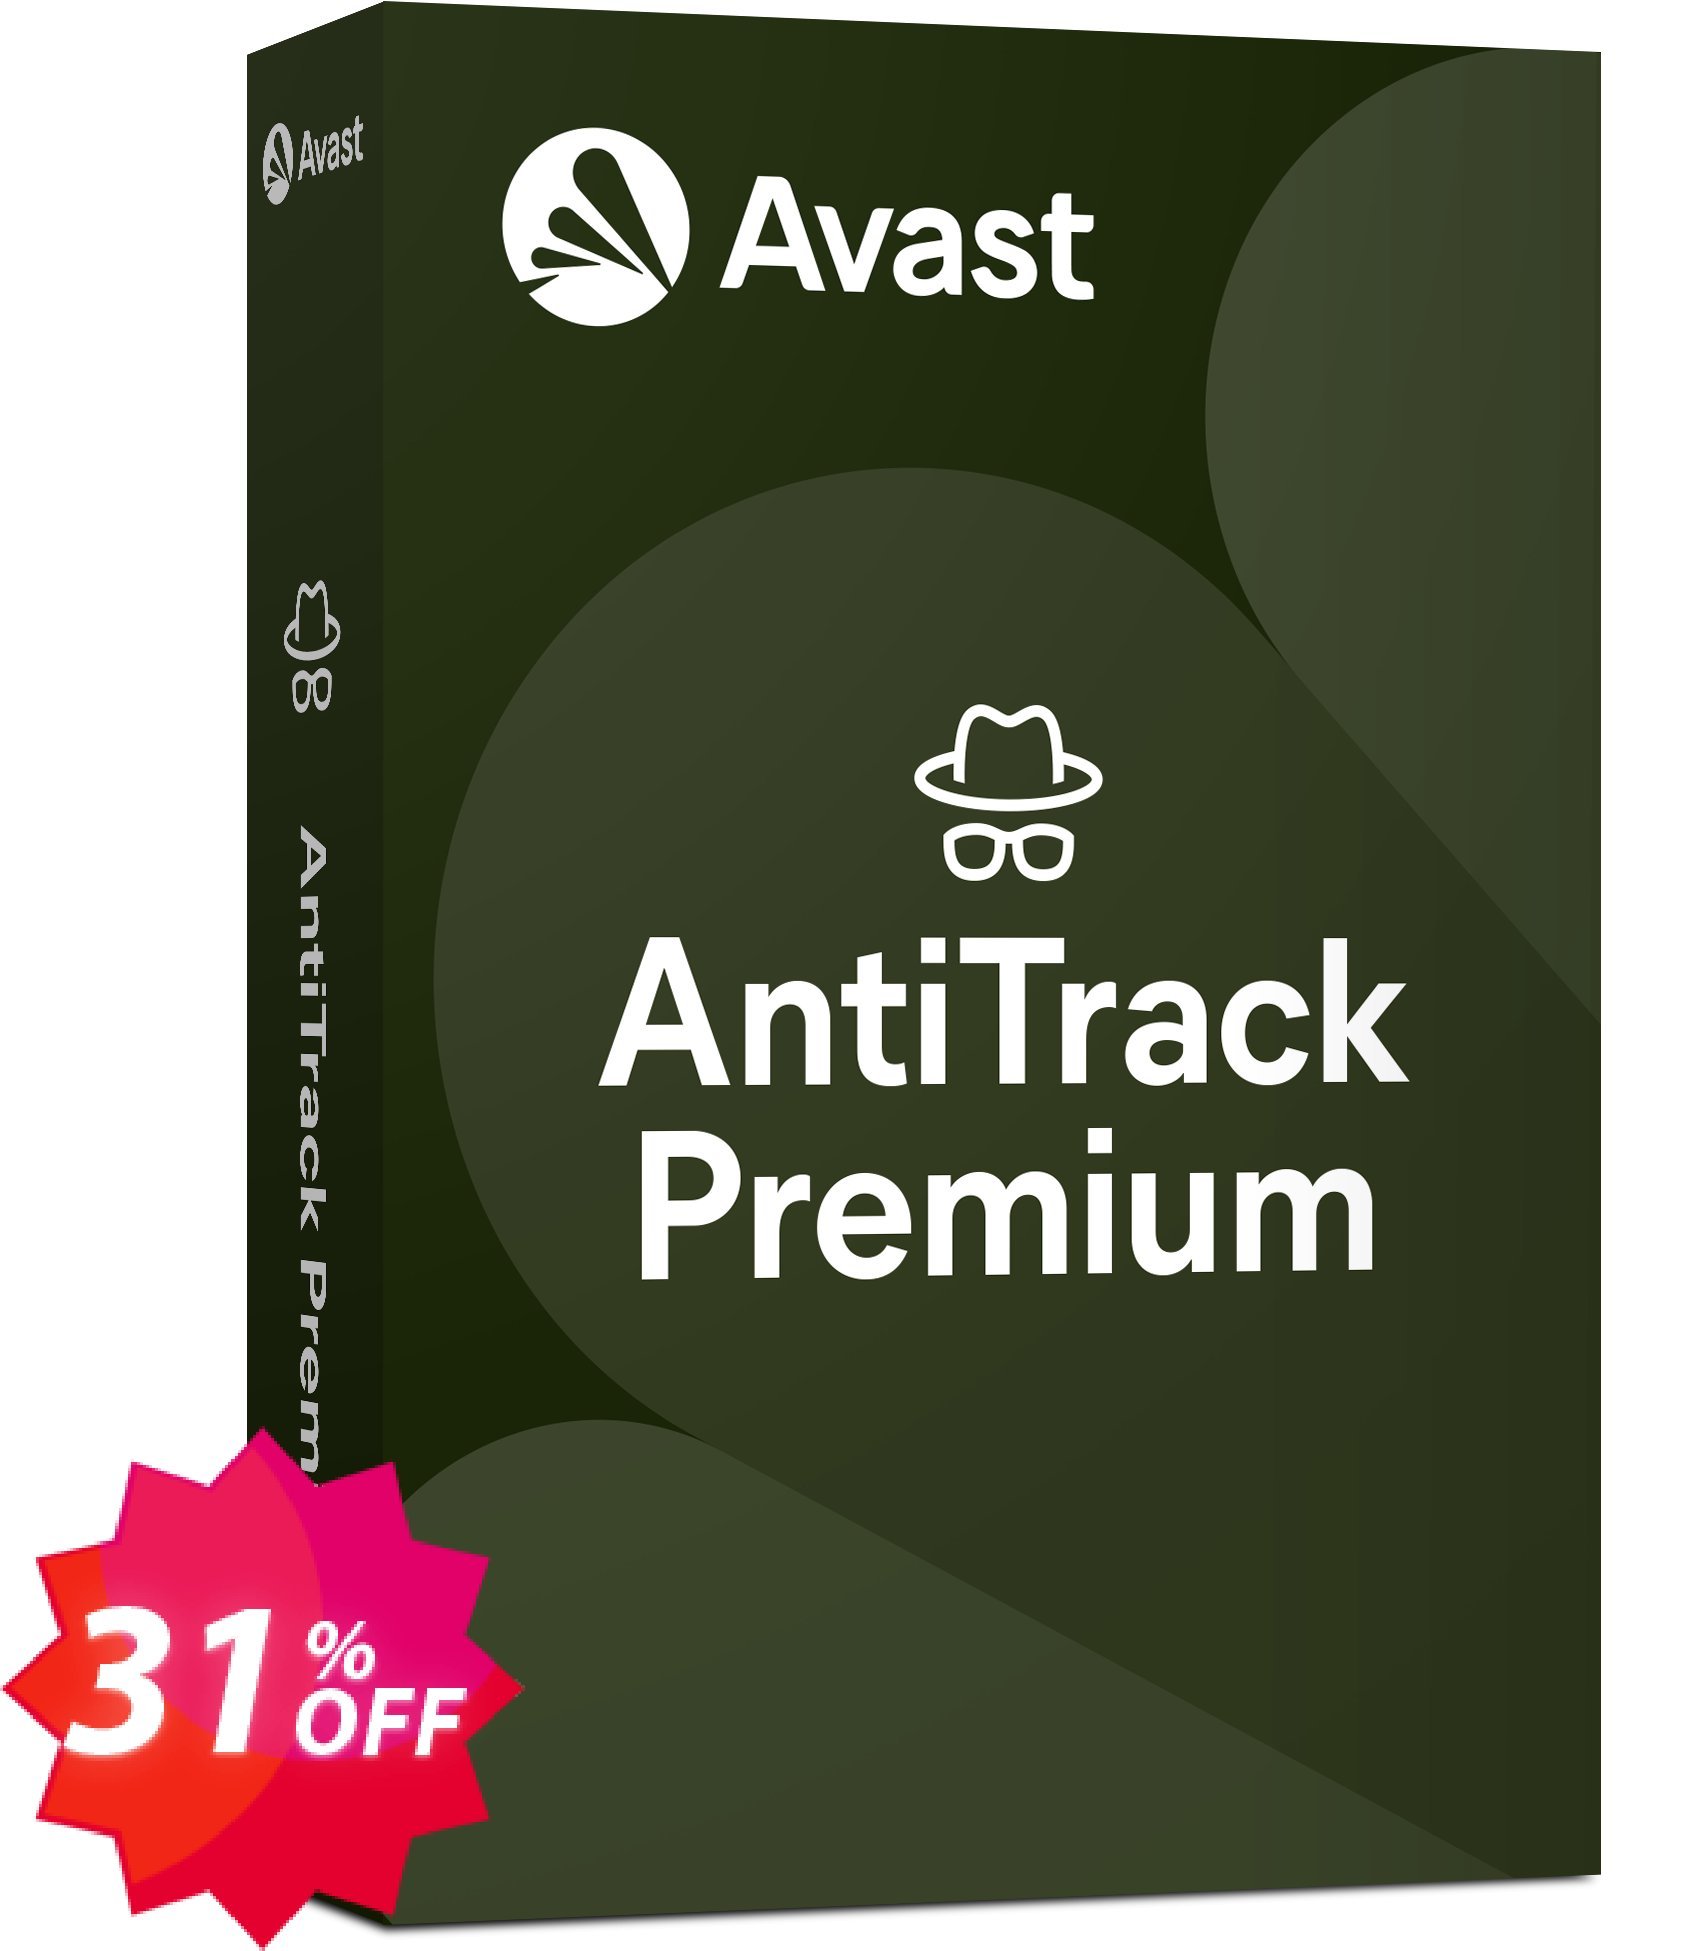 Avast AntiTrack Premium Coupon code 31% discount 